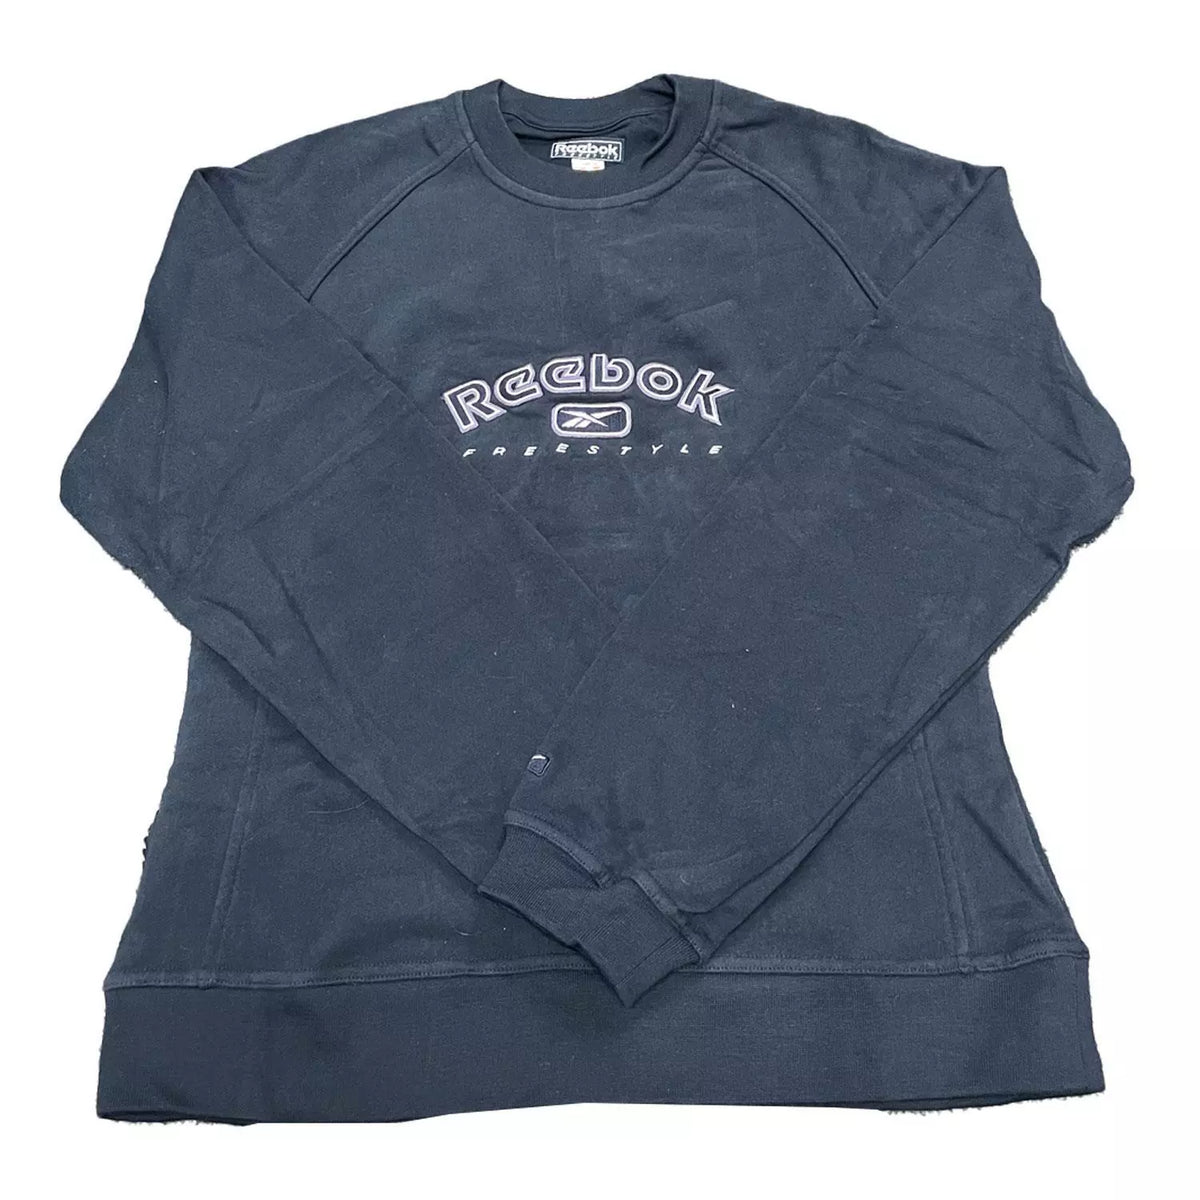 Reebok Womens Big Logo Sweatshirt - Navy - UK Size 12